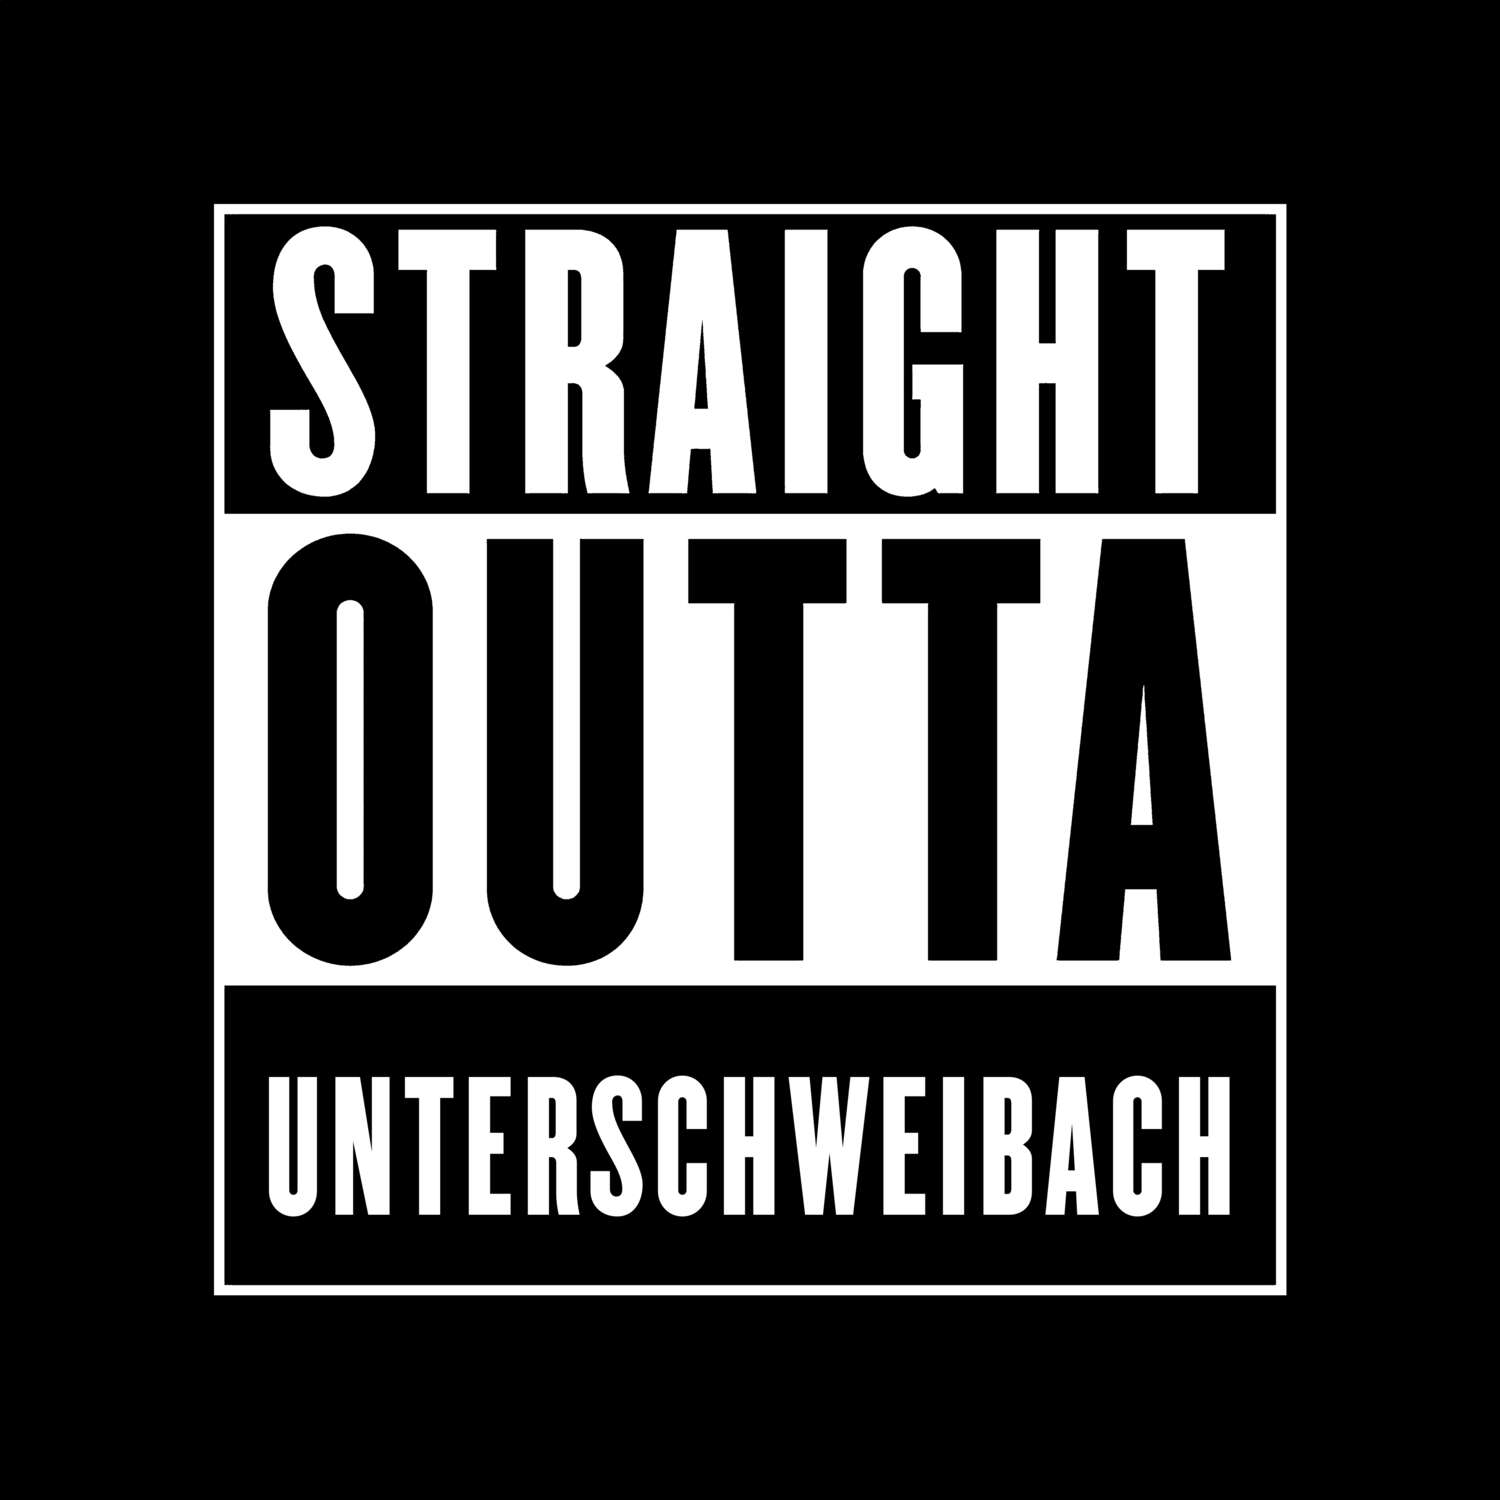 Unterschweibach T-Shirt »Straight Outta«